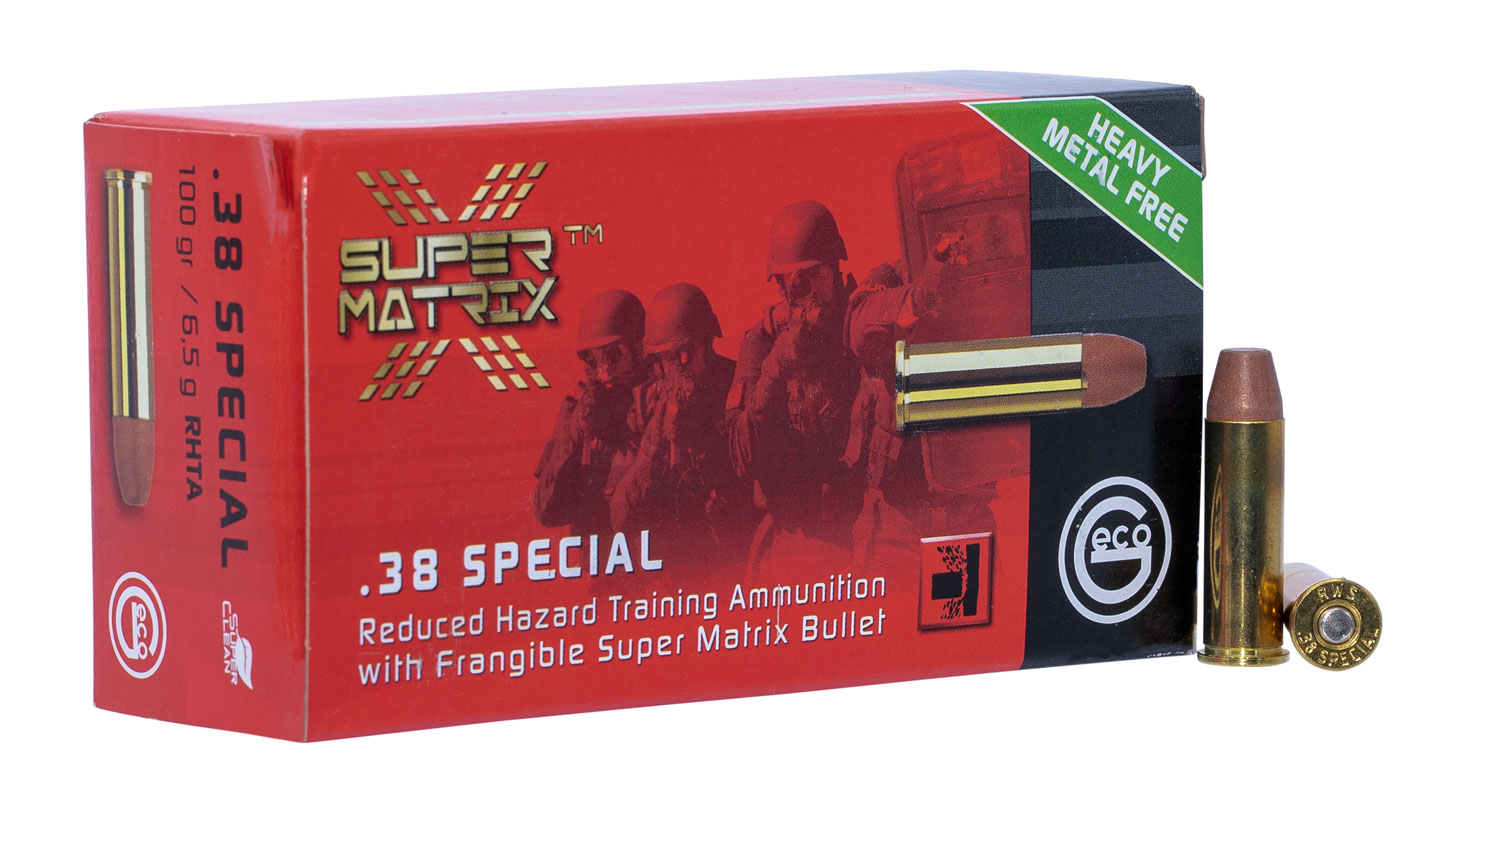 403840050 Reduced Hazard Training Ammo Geco Super Matrix 
38 Special 100 GR Lead Free Frangible 50 Bx/10 Cs